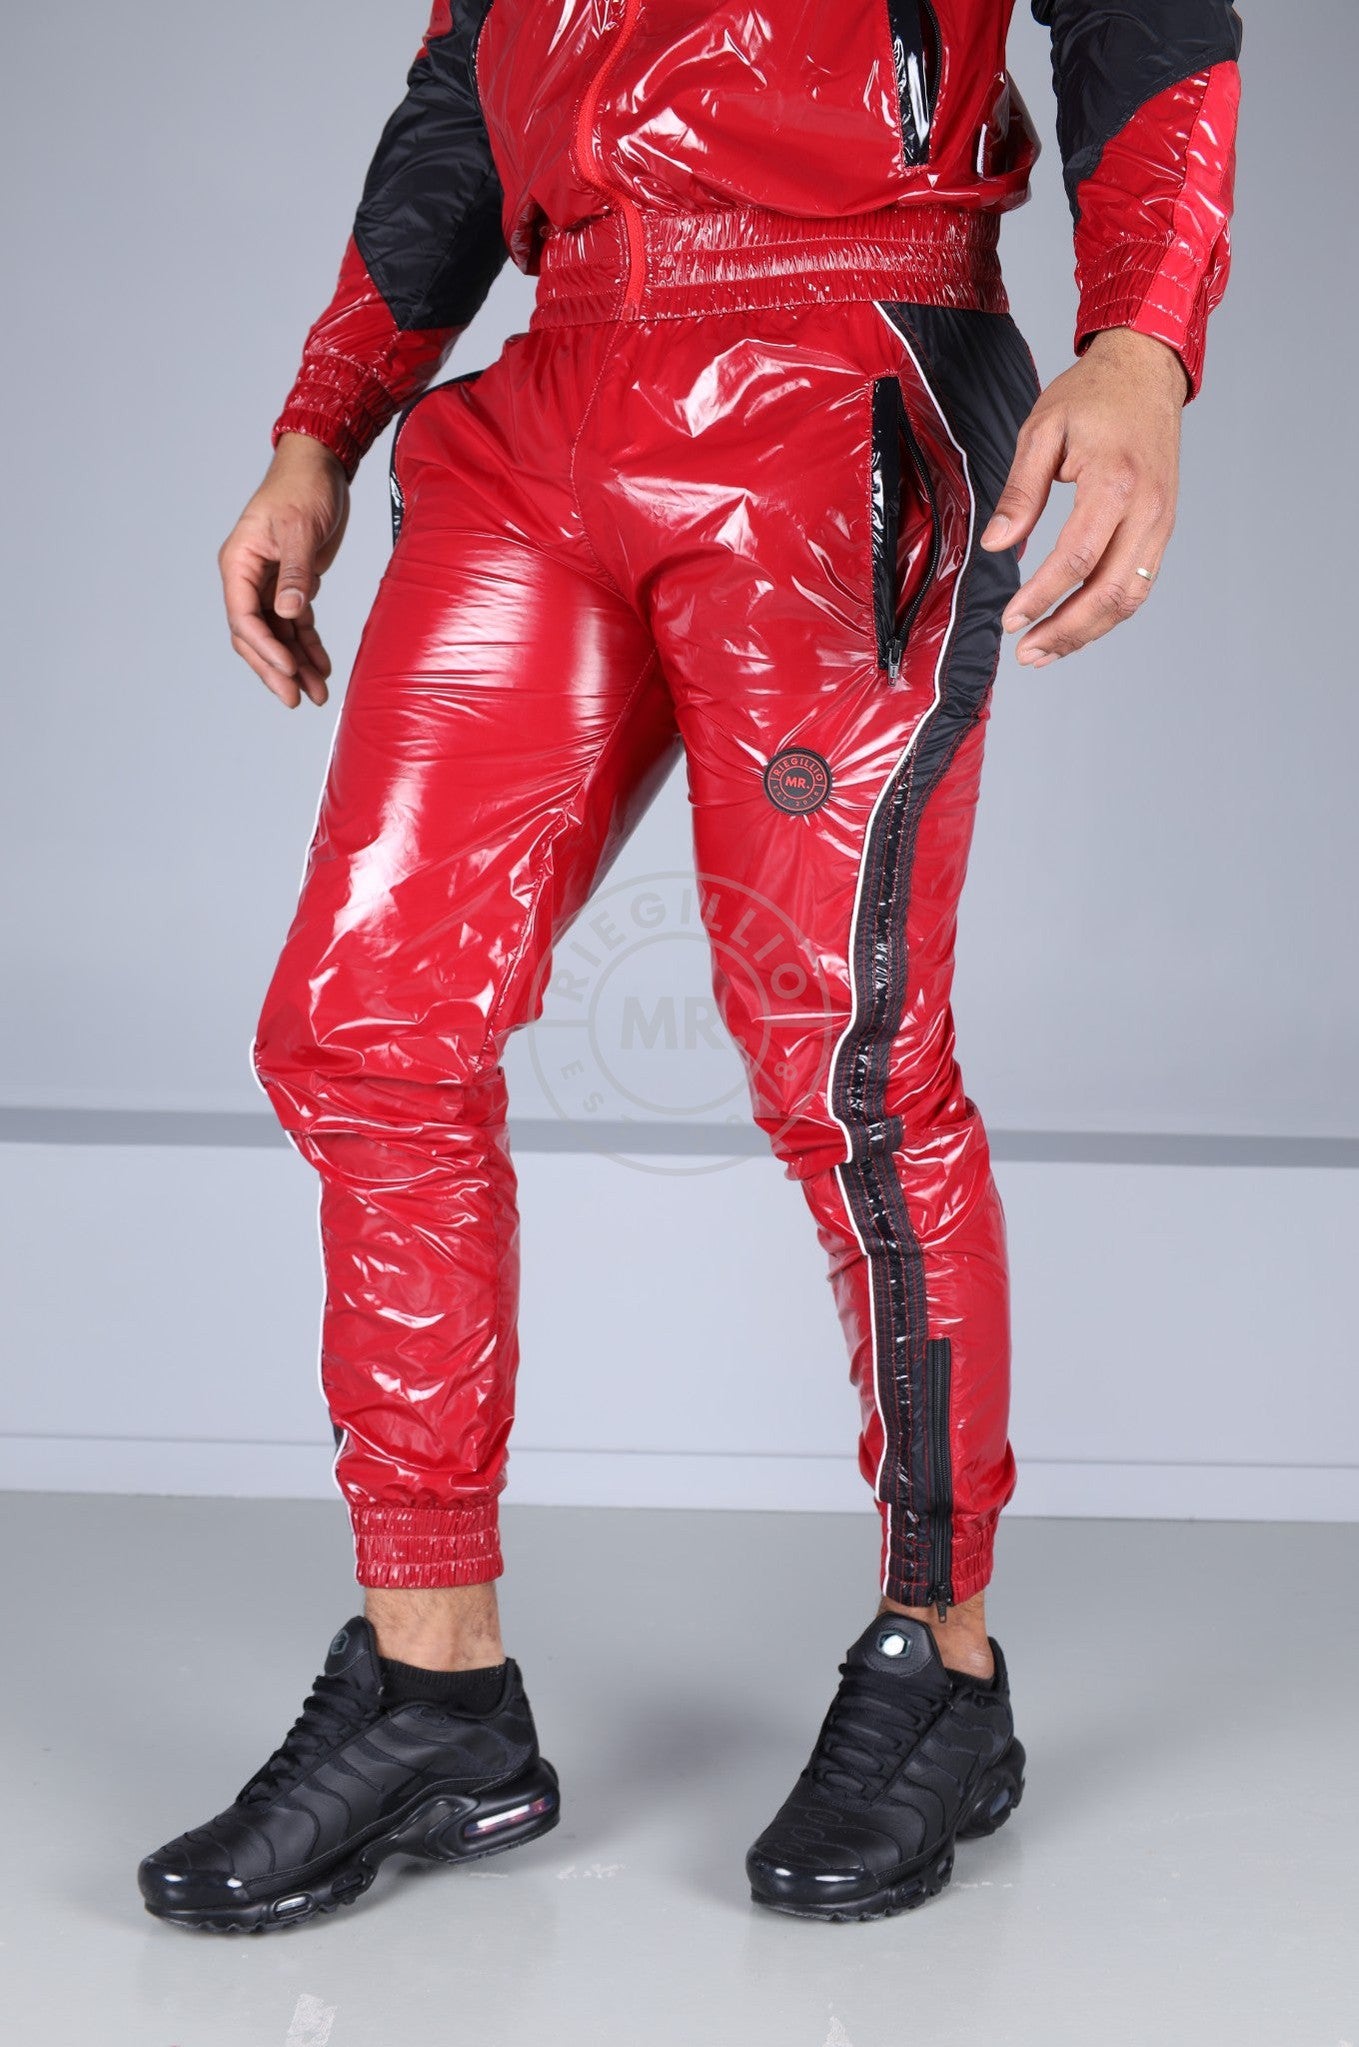 Shiny Nylon 24 Tracksuit Pants - Red at MR. Riegillio